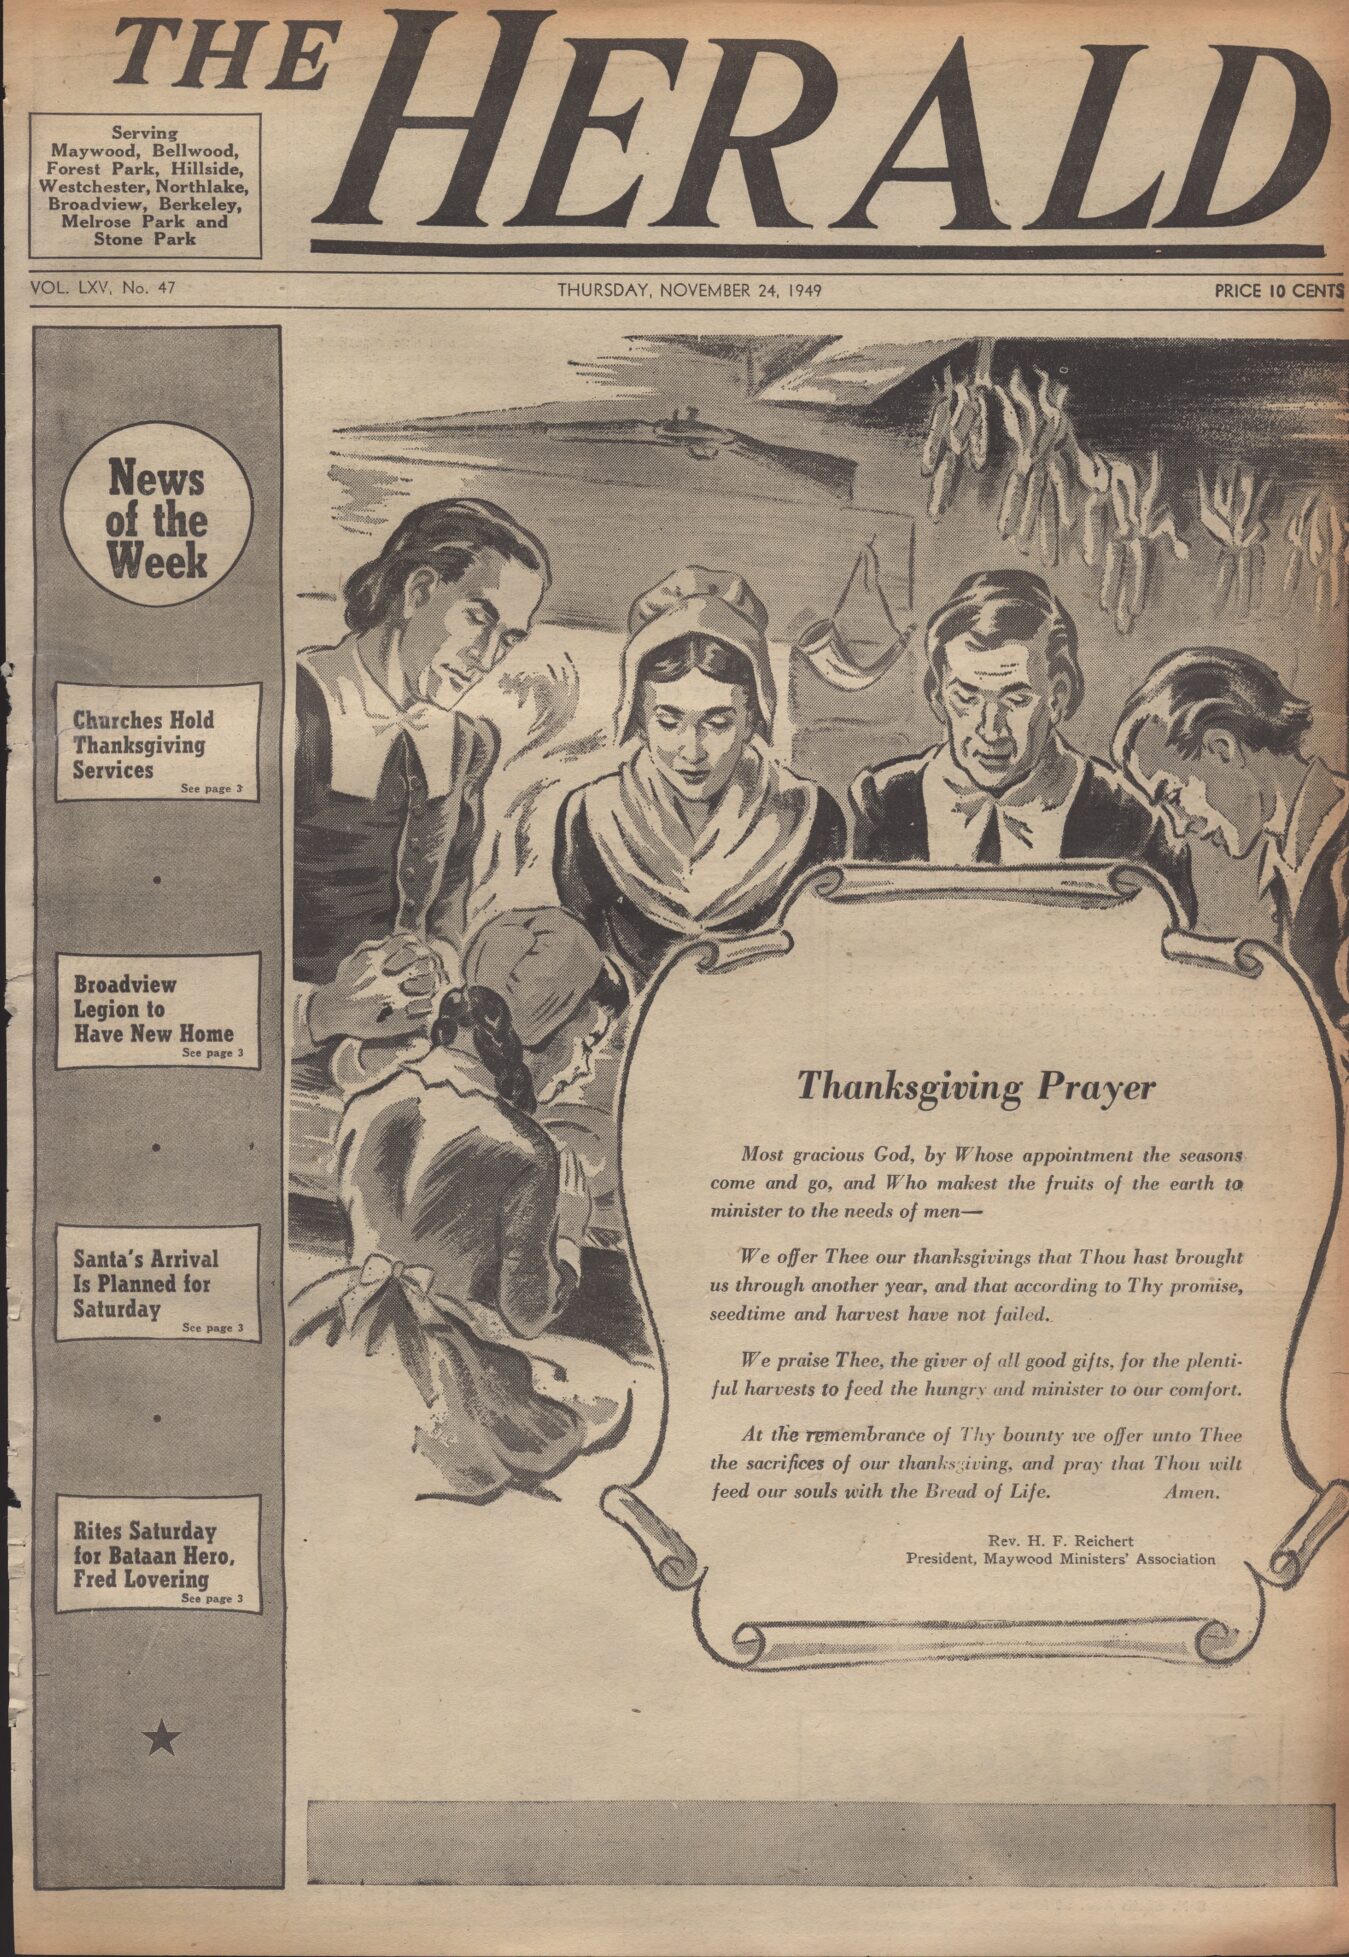 The Herald – 19491124